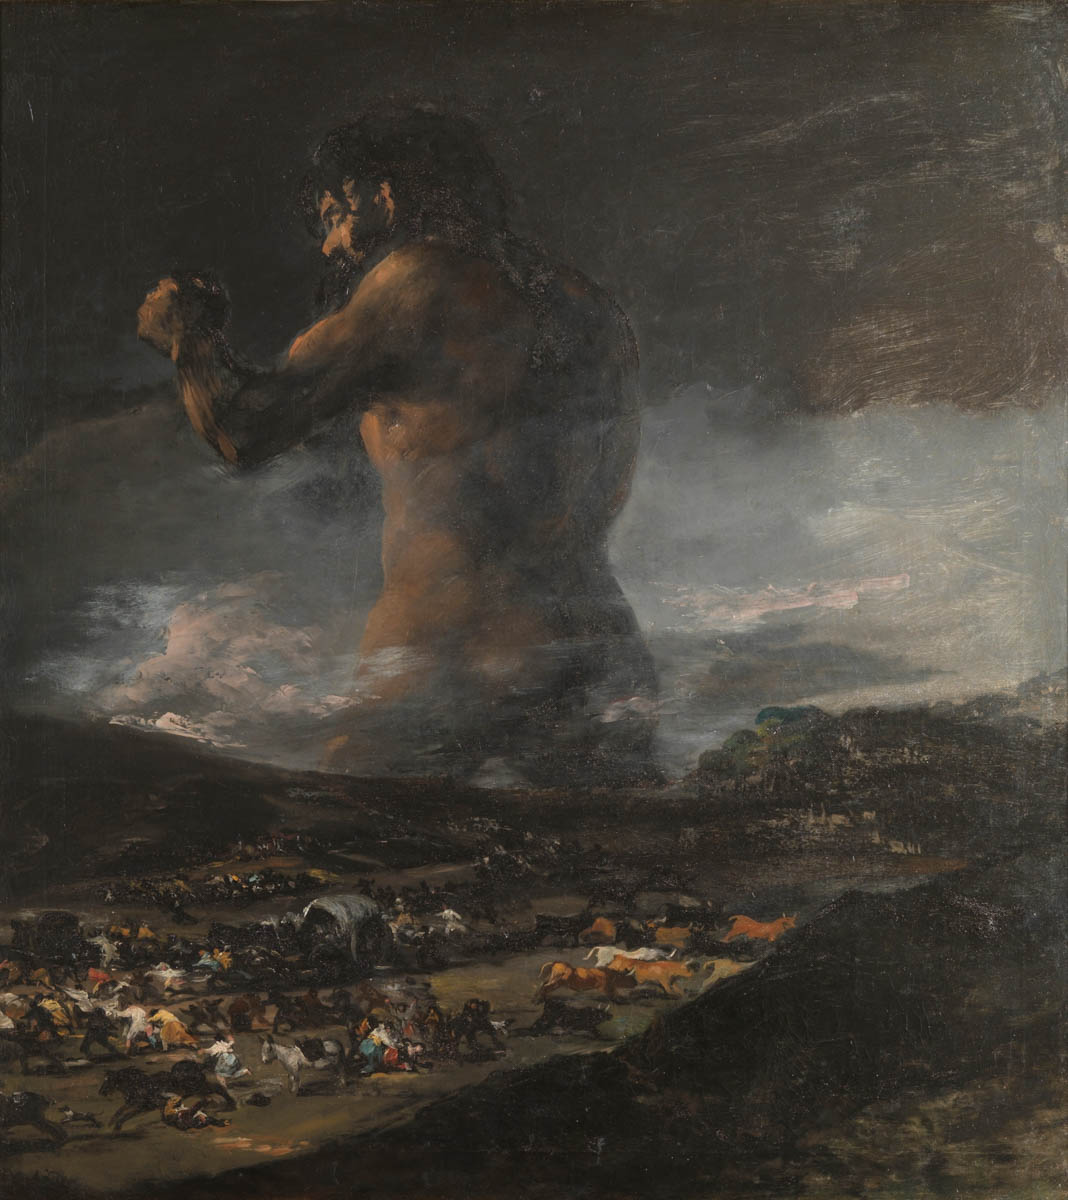 Figure 20. Goya, Gigante.